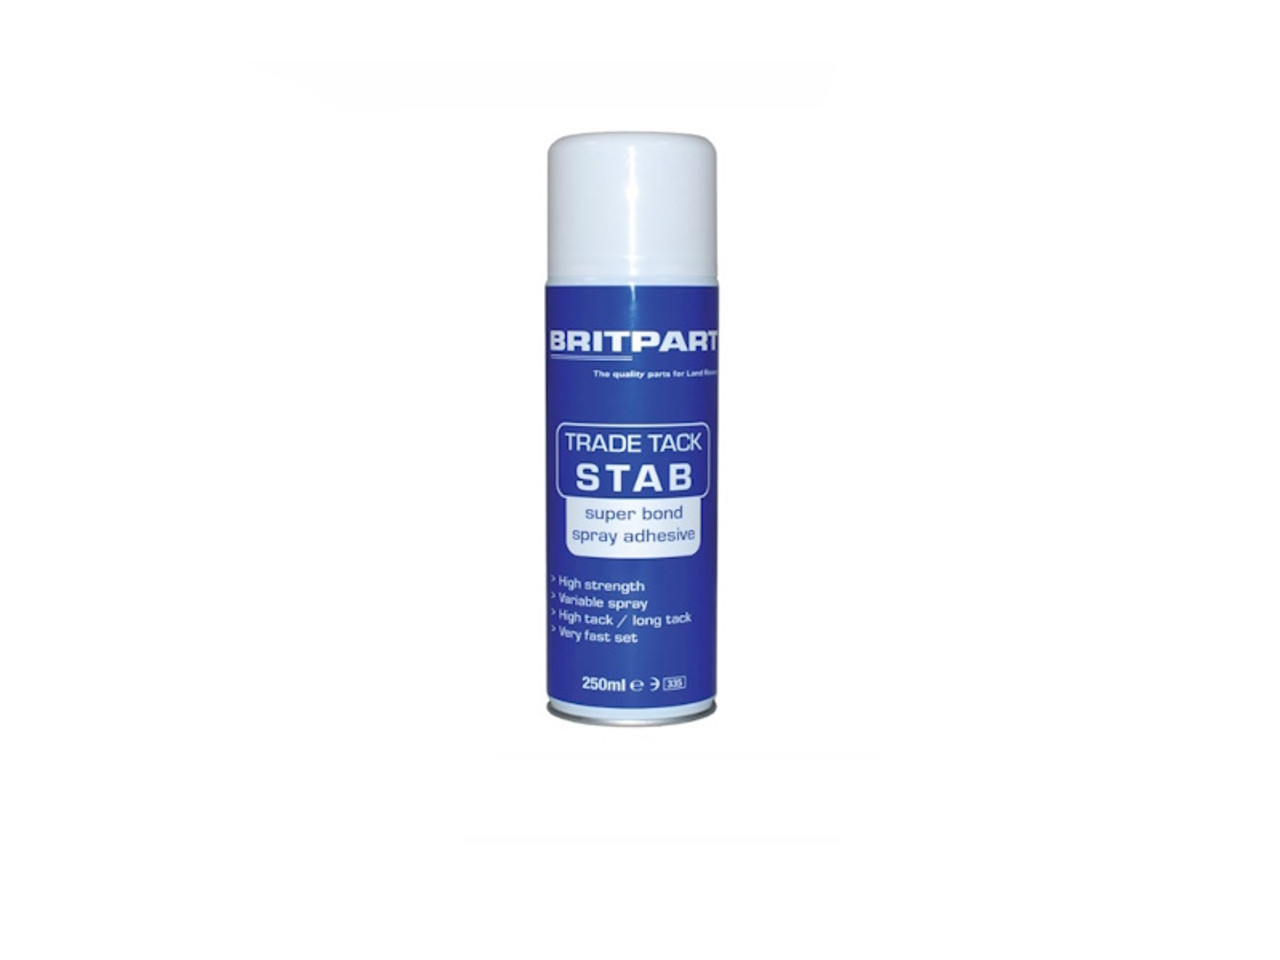 Britpart Trade Tack Stab Bond Spray Adhesive - DA6348